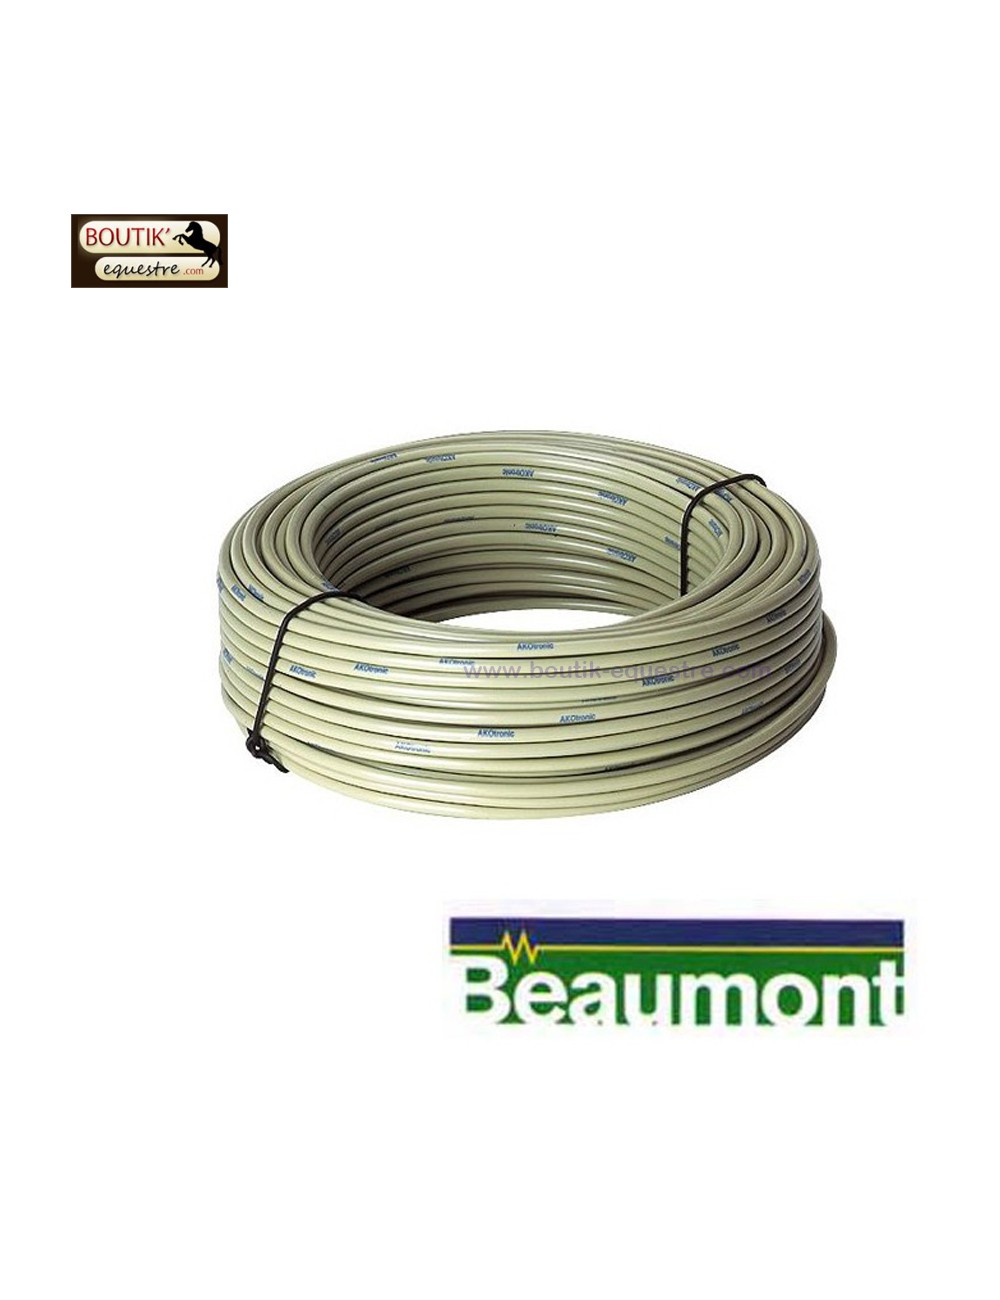 Cable Beaumont haute tension